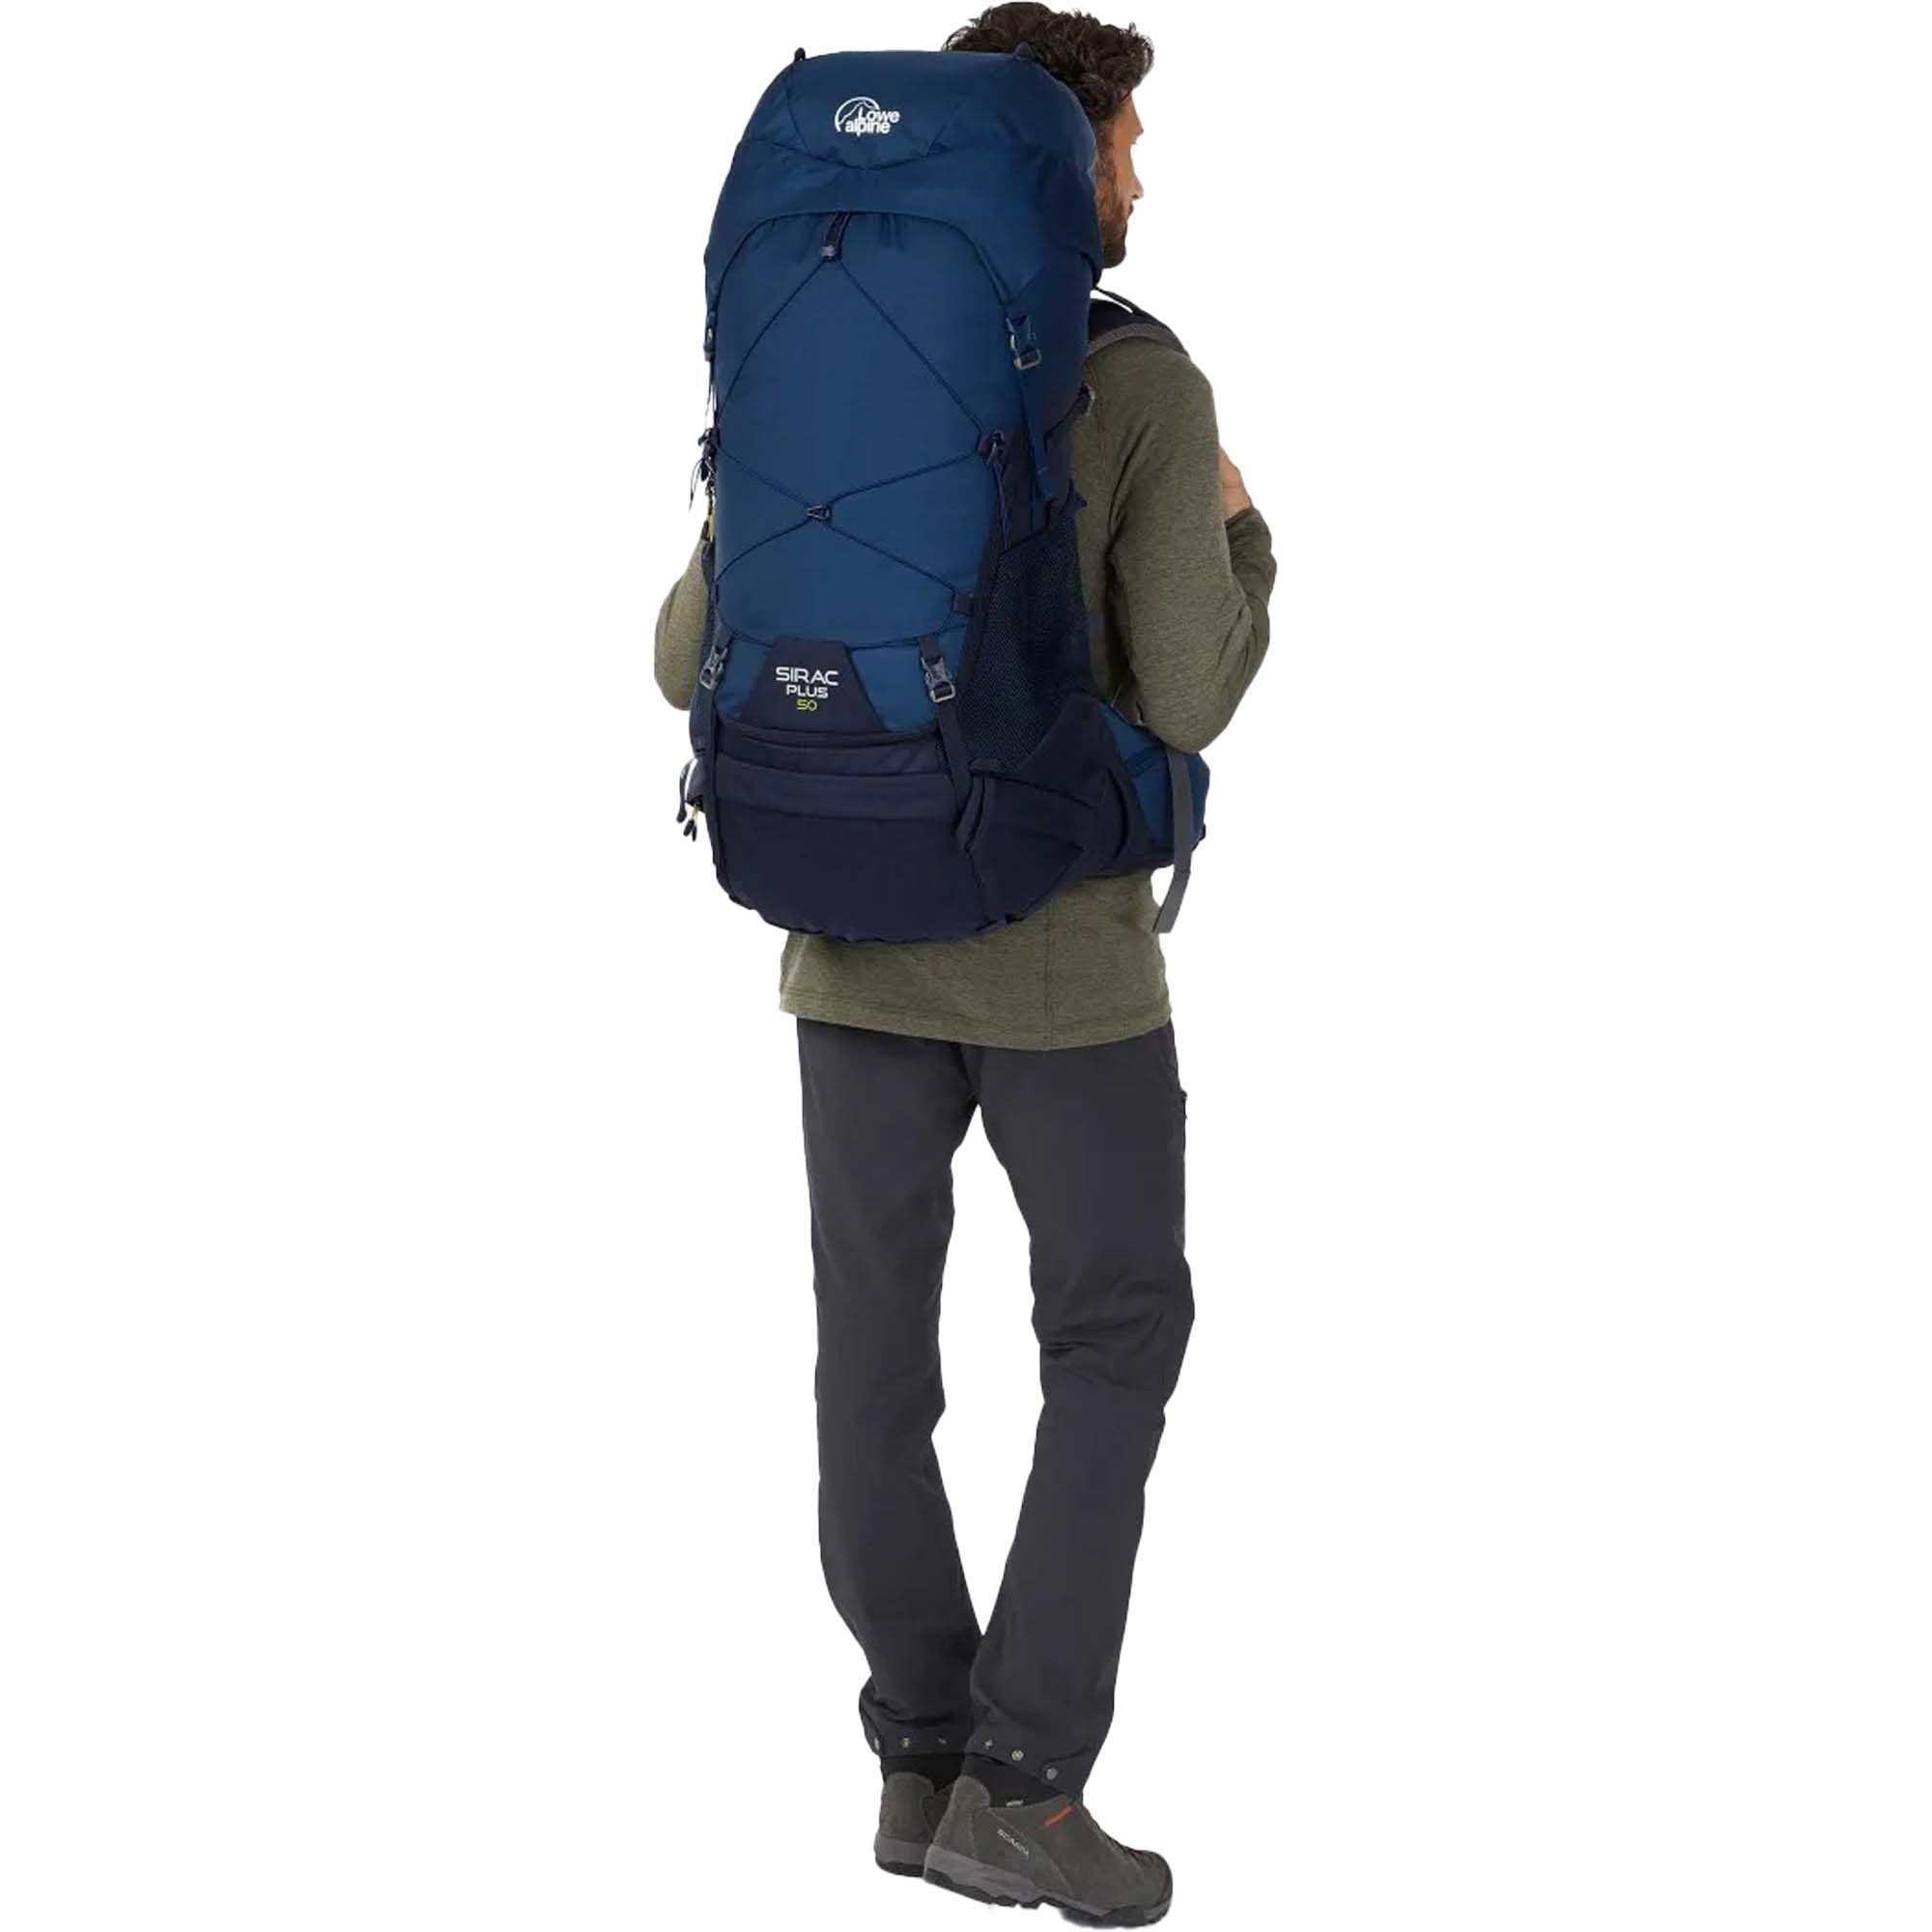 Lowe Alpine Sirac Plus 50 Trekking Backpack